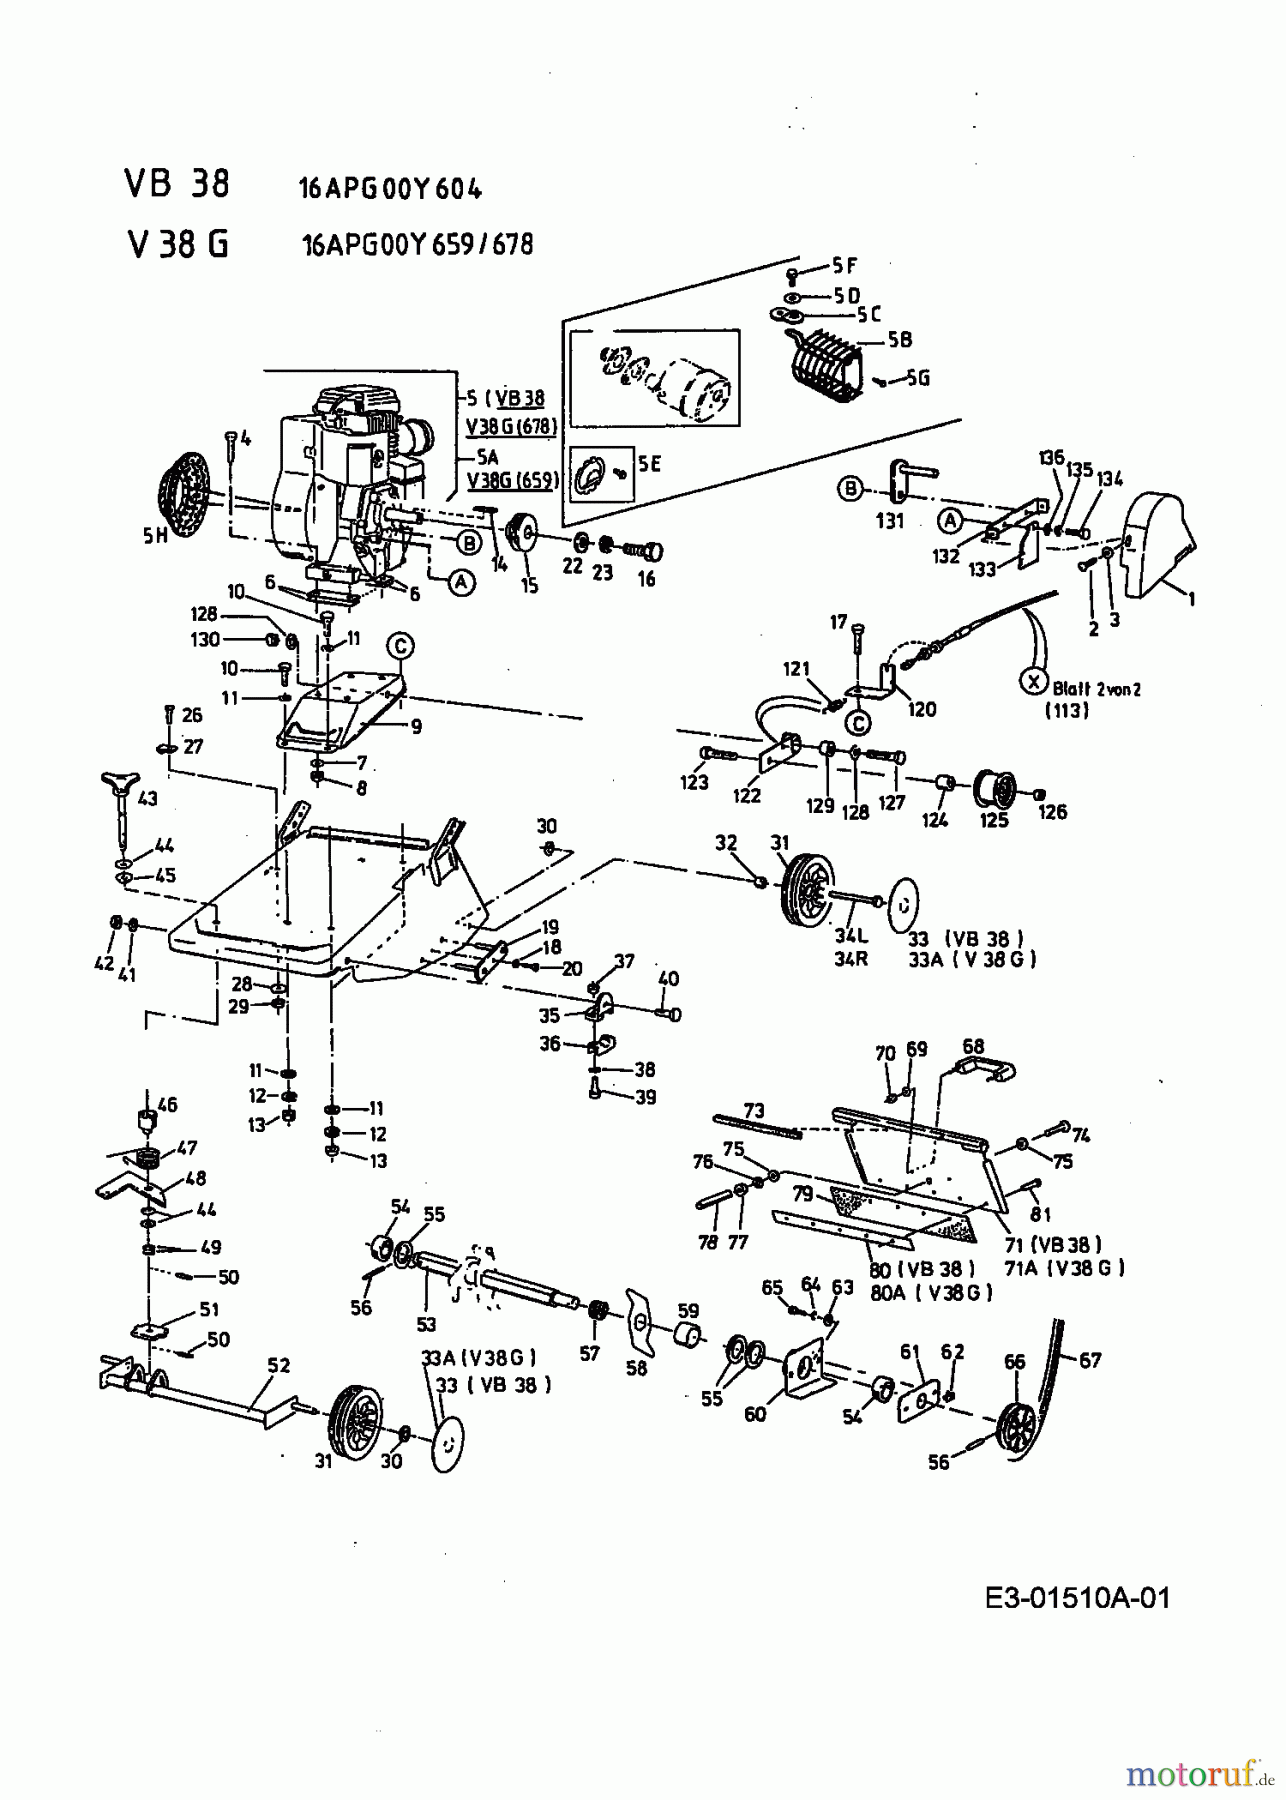  MTD Motorvertikutierer V 38 G 16APG00Y678  (2000) Messerwalze, Motor, Räder